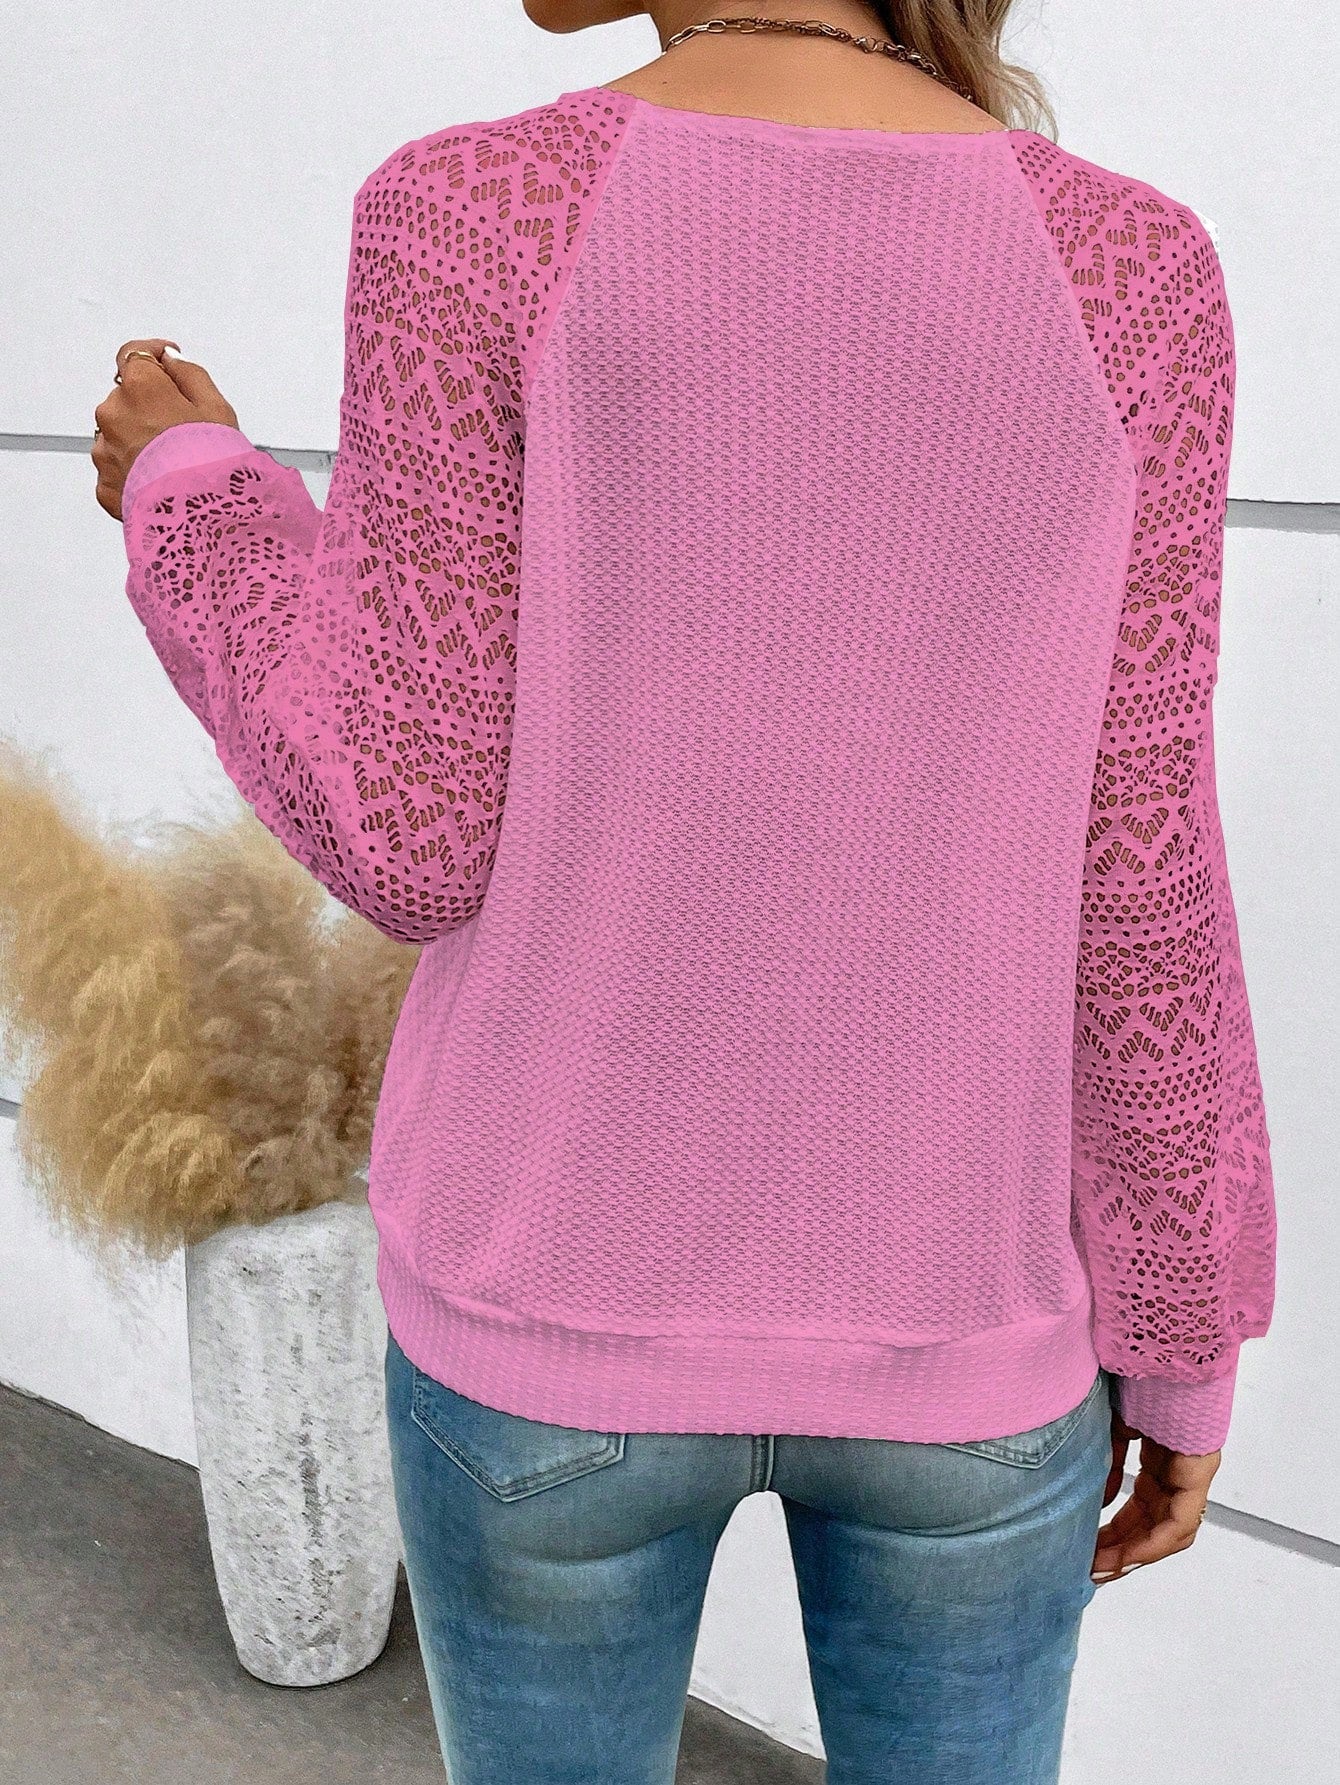 Contrast Lace Raglan Sleeve Sweatshirt